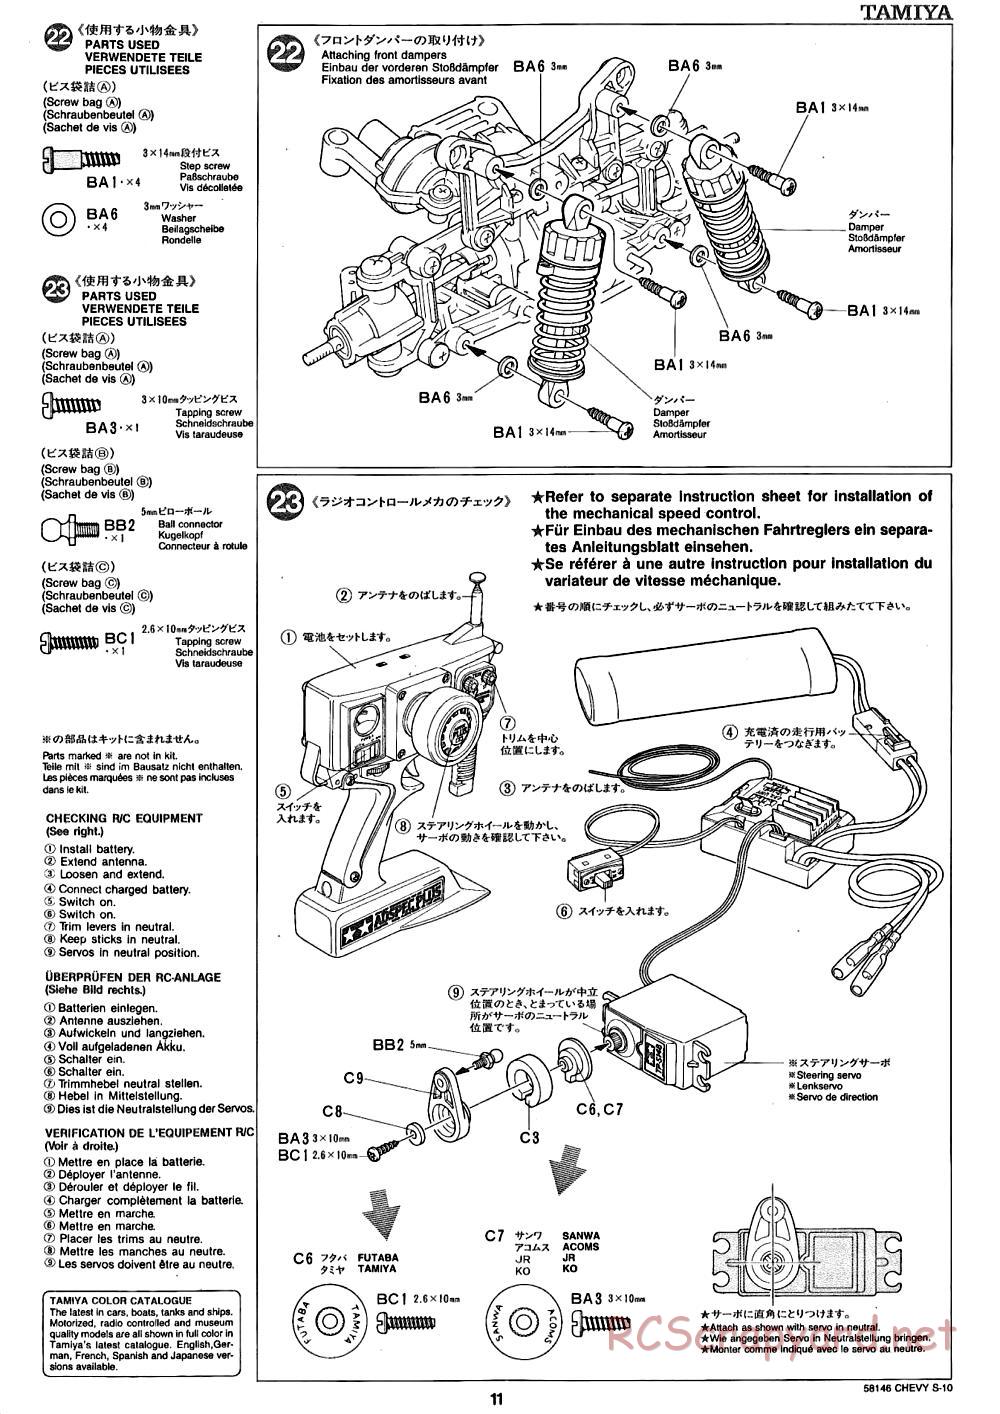 Tamiya - Chevy S-10 Chassis - Manual - Page 11